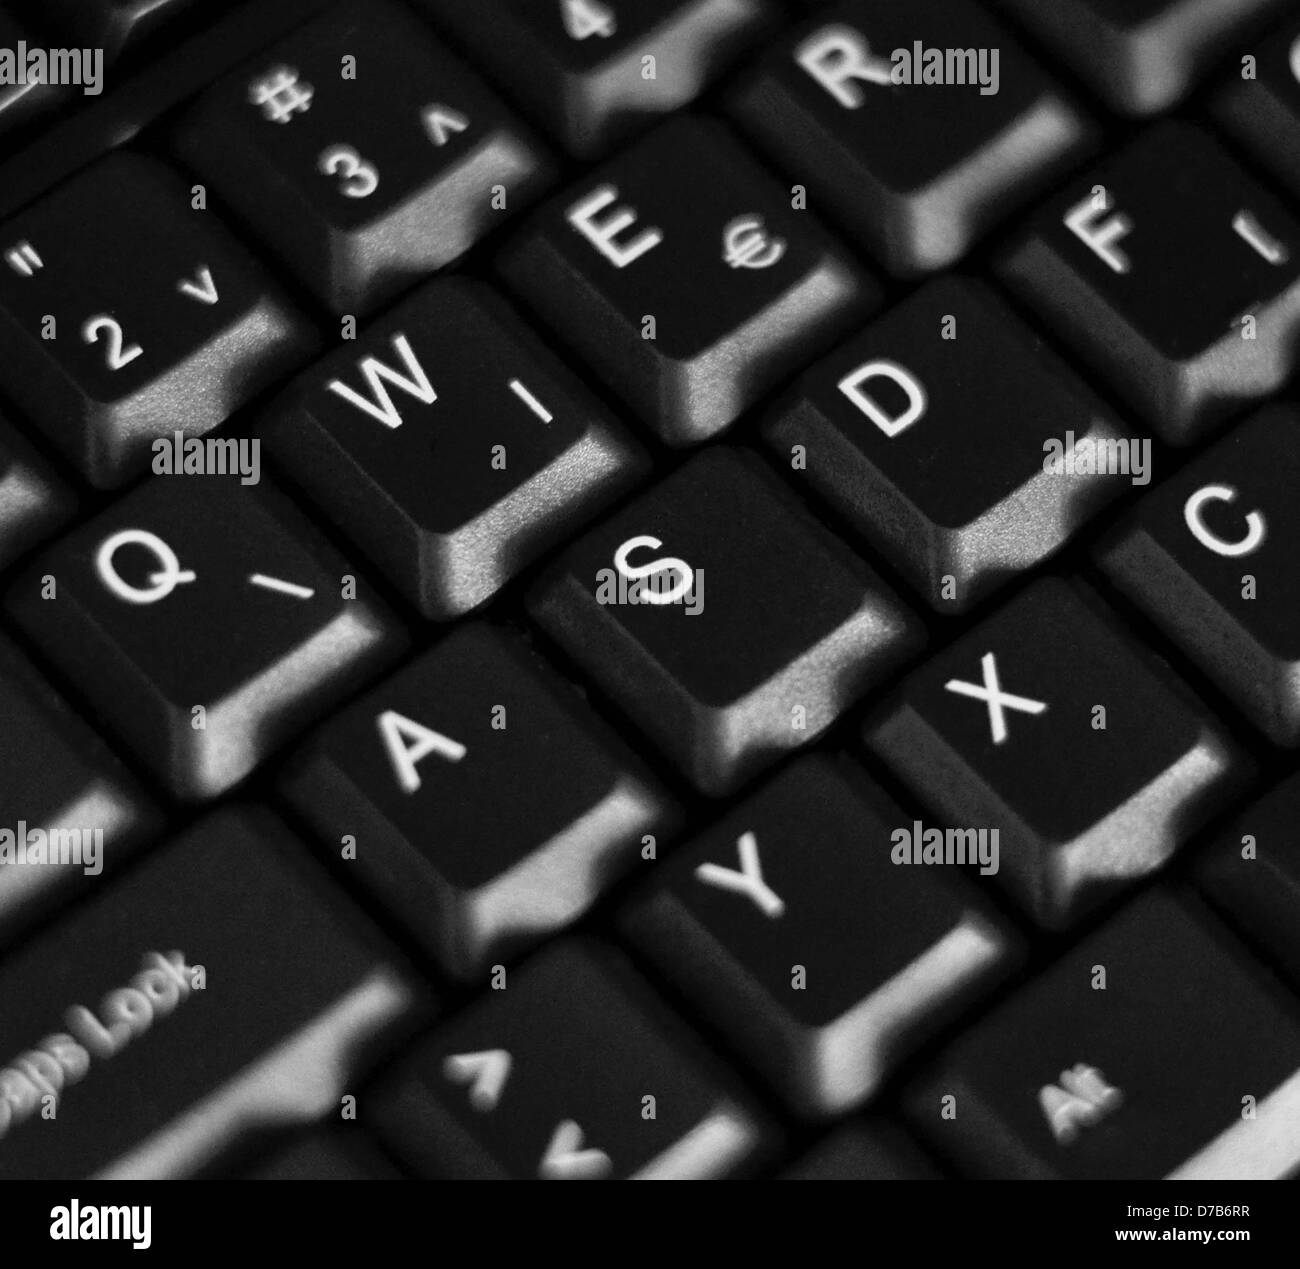 Keyboard macro shot Stock Photo